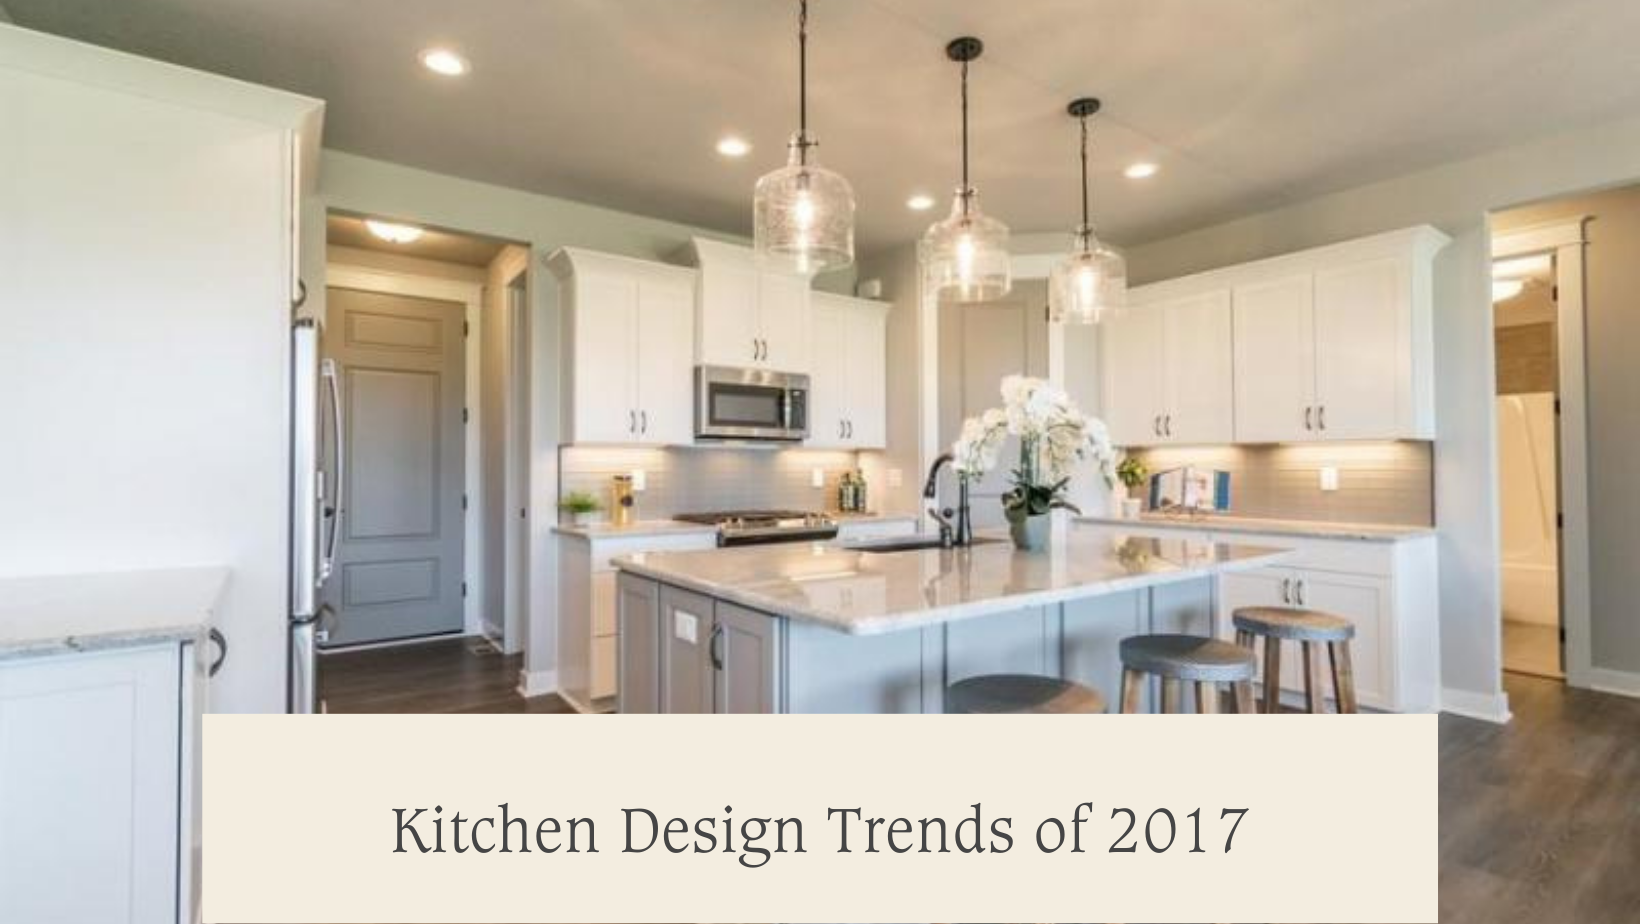 Kitchen Design Trends for 2017